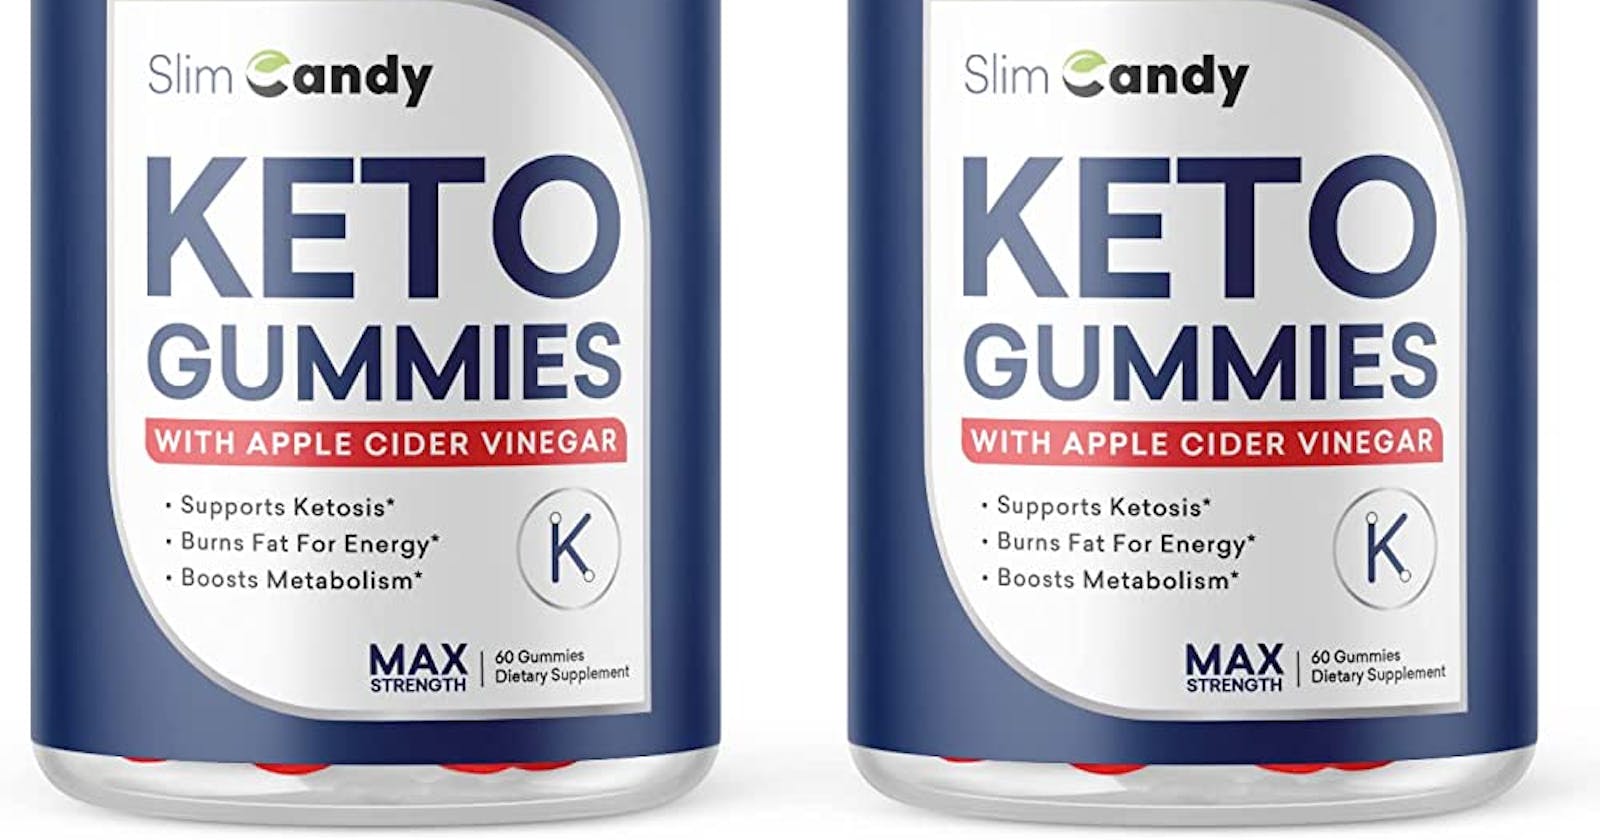 Slim Candy Keto Gummies Weight Loss